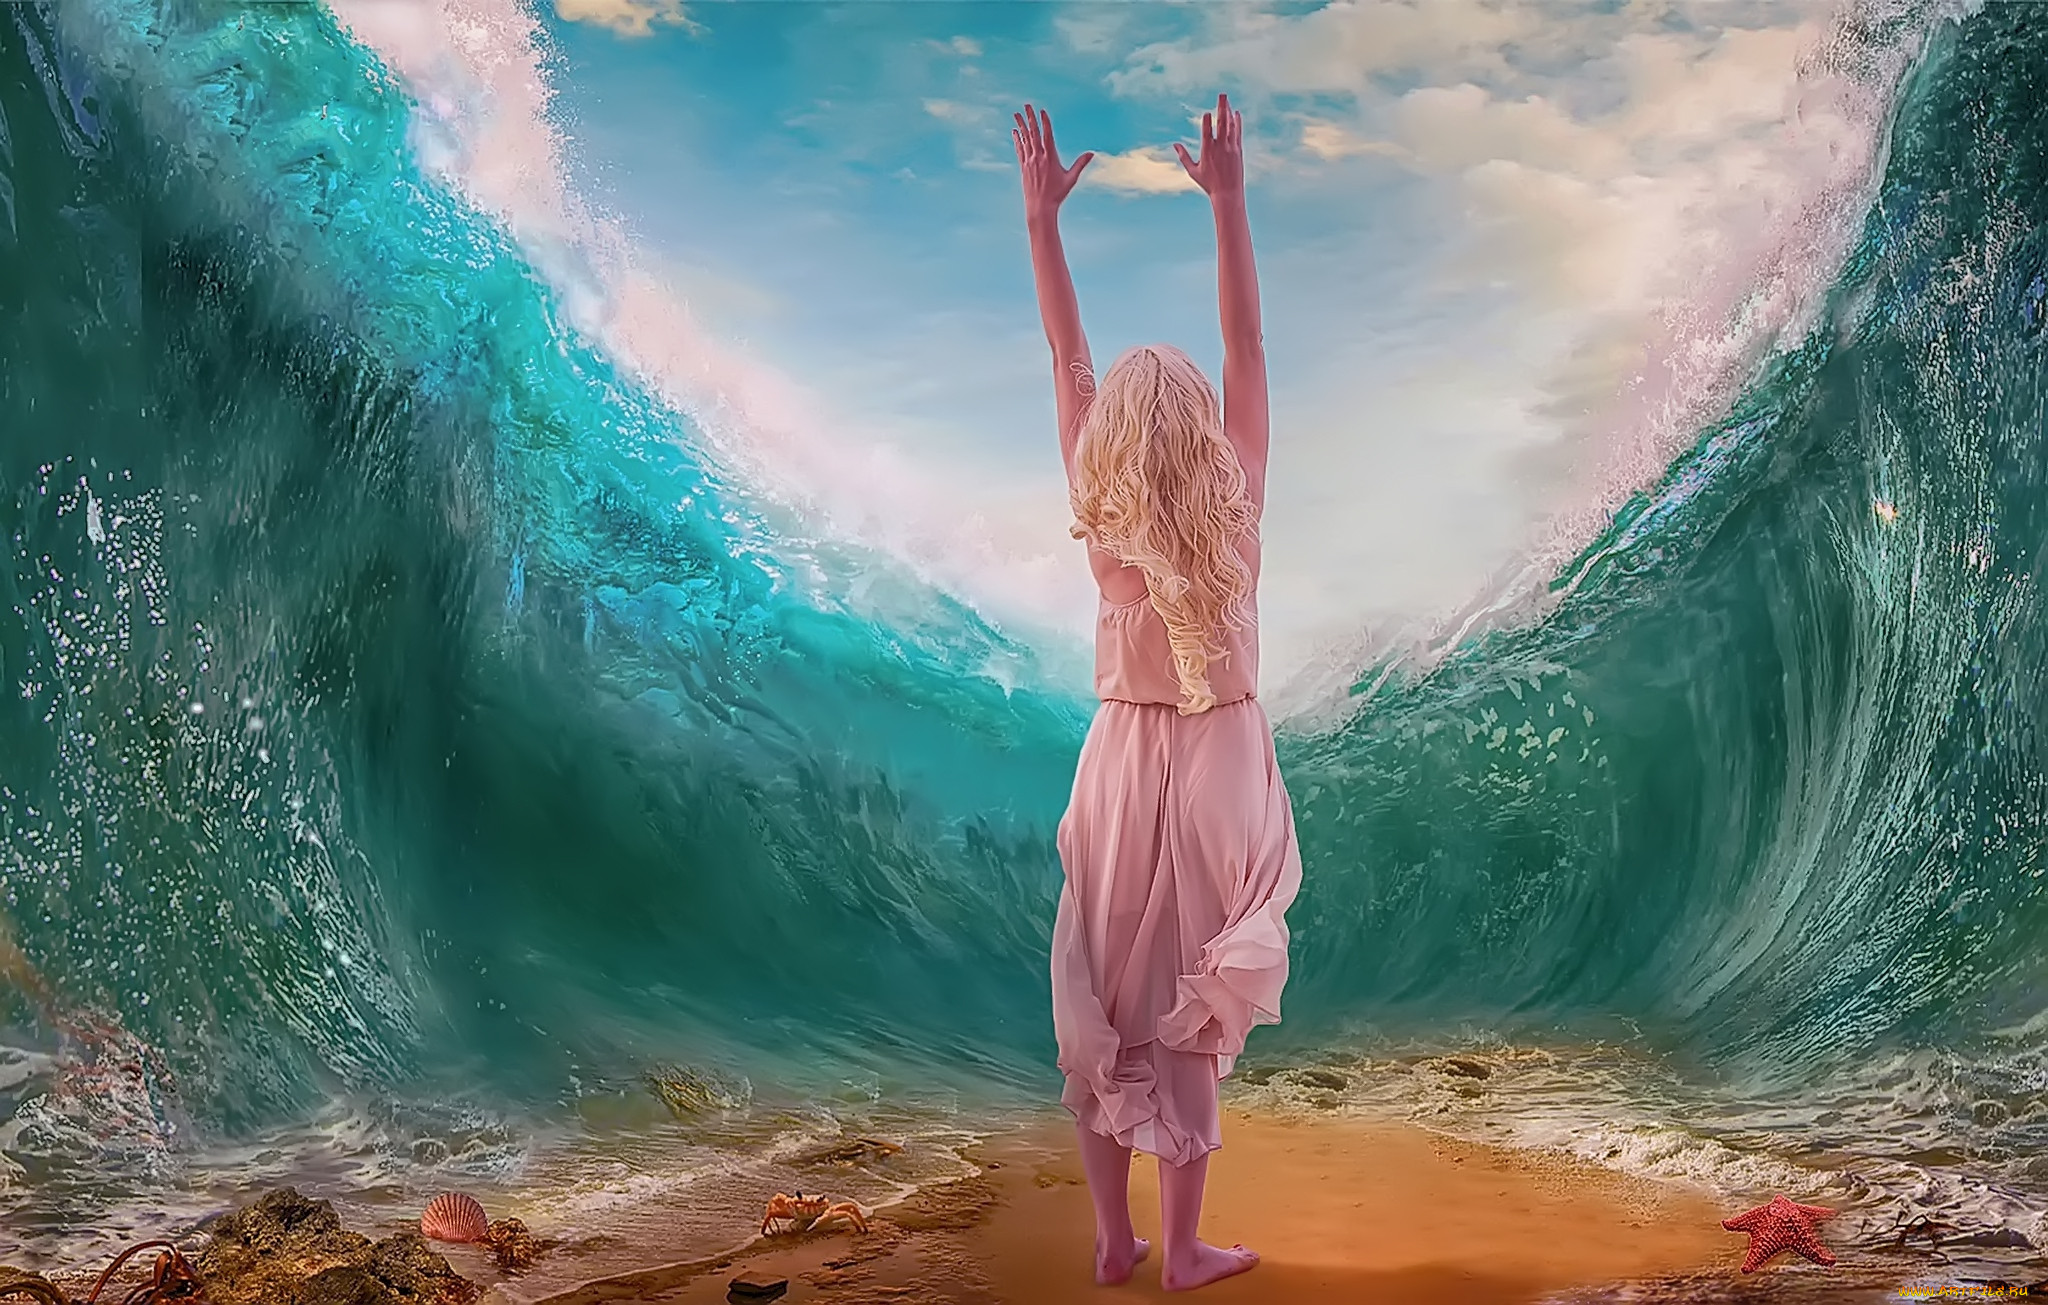 Дама вдохновения. Женщина волна. Девушка на фоне волн. Девушка-море. Женщина Вдохновение.